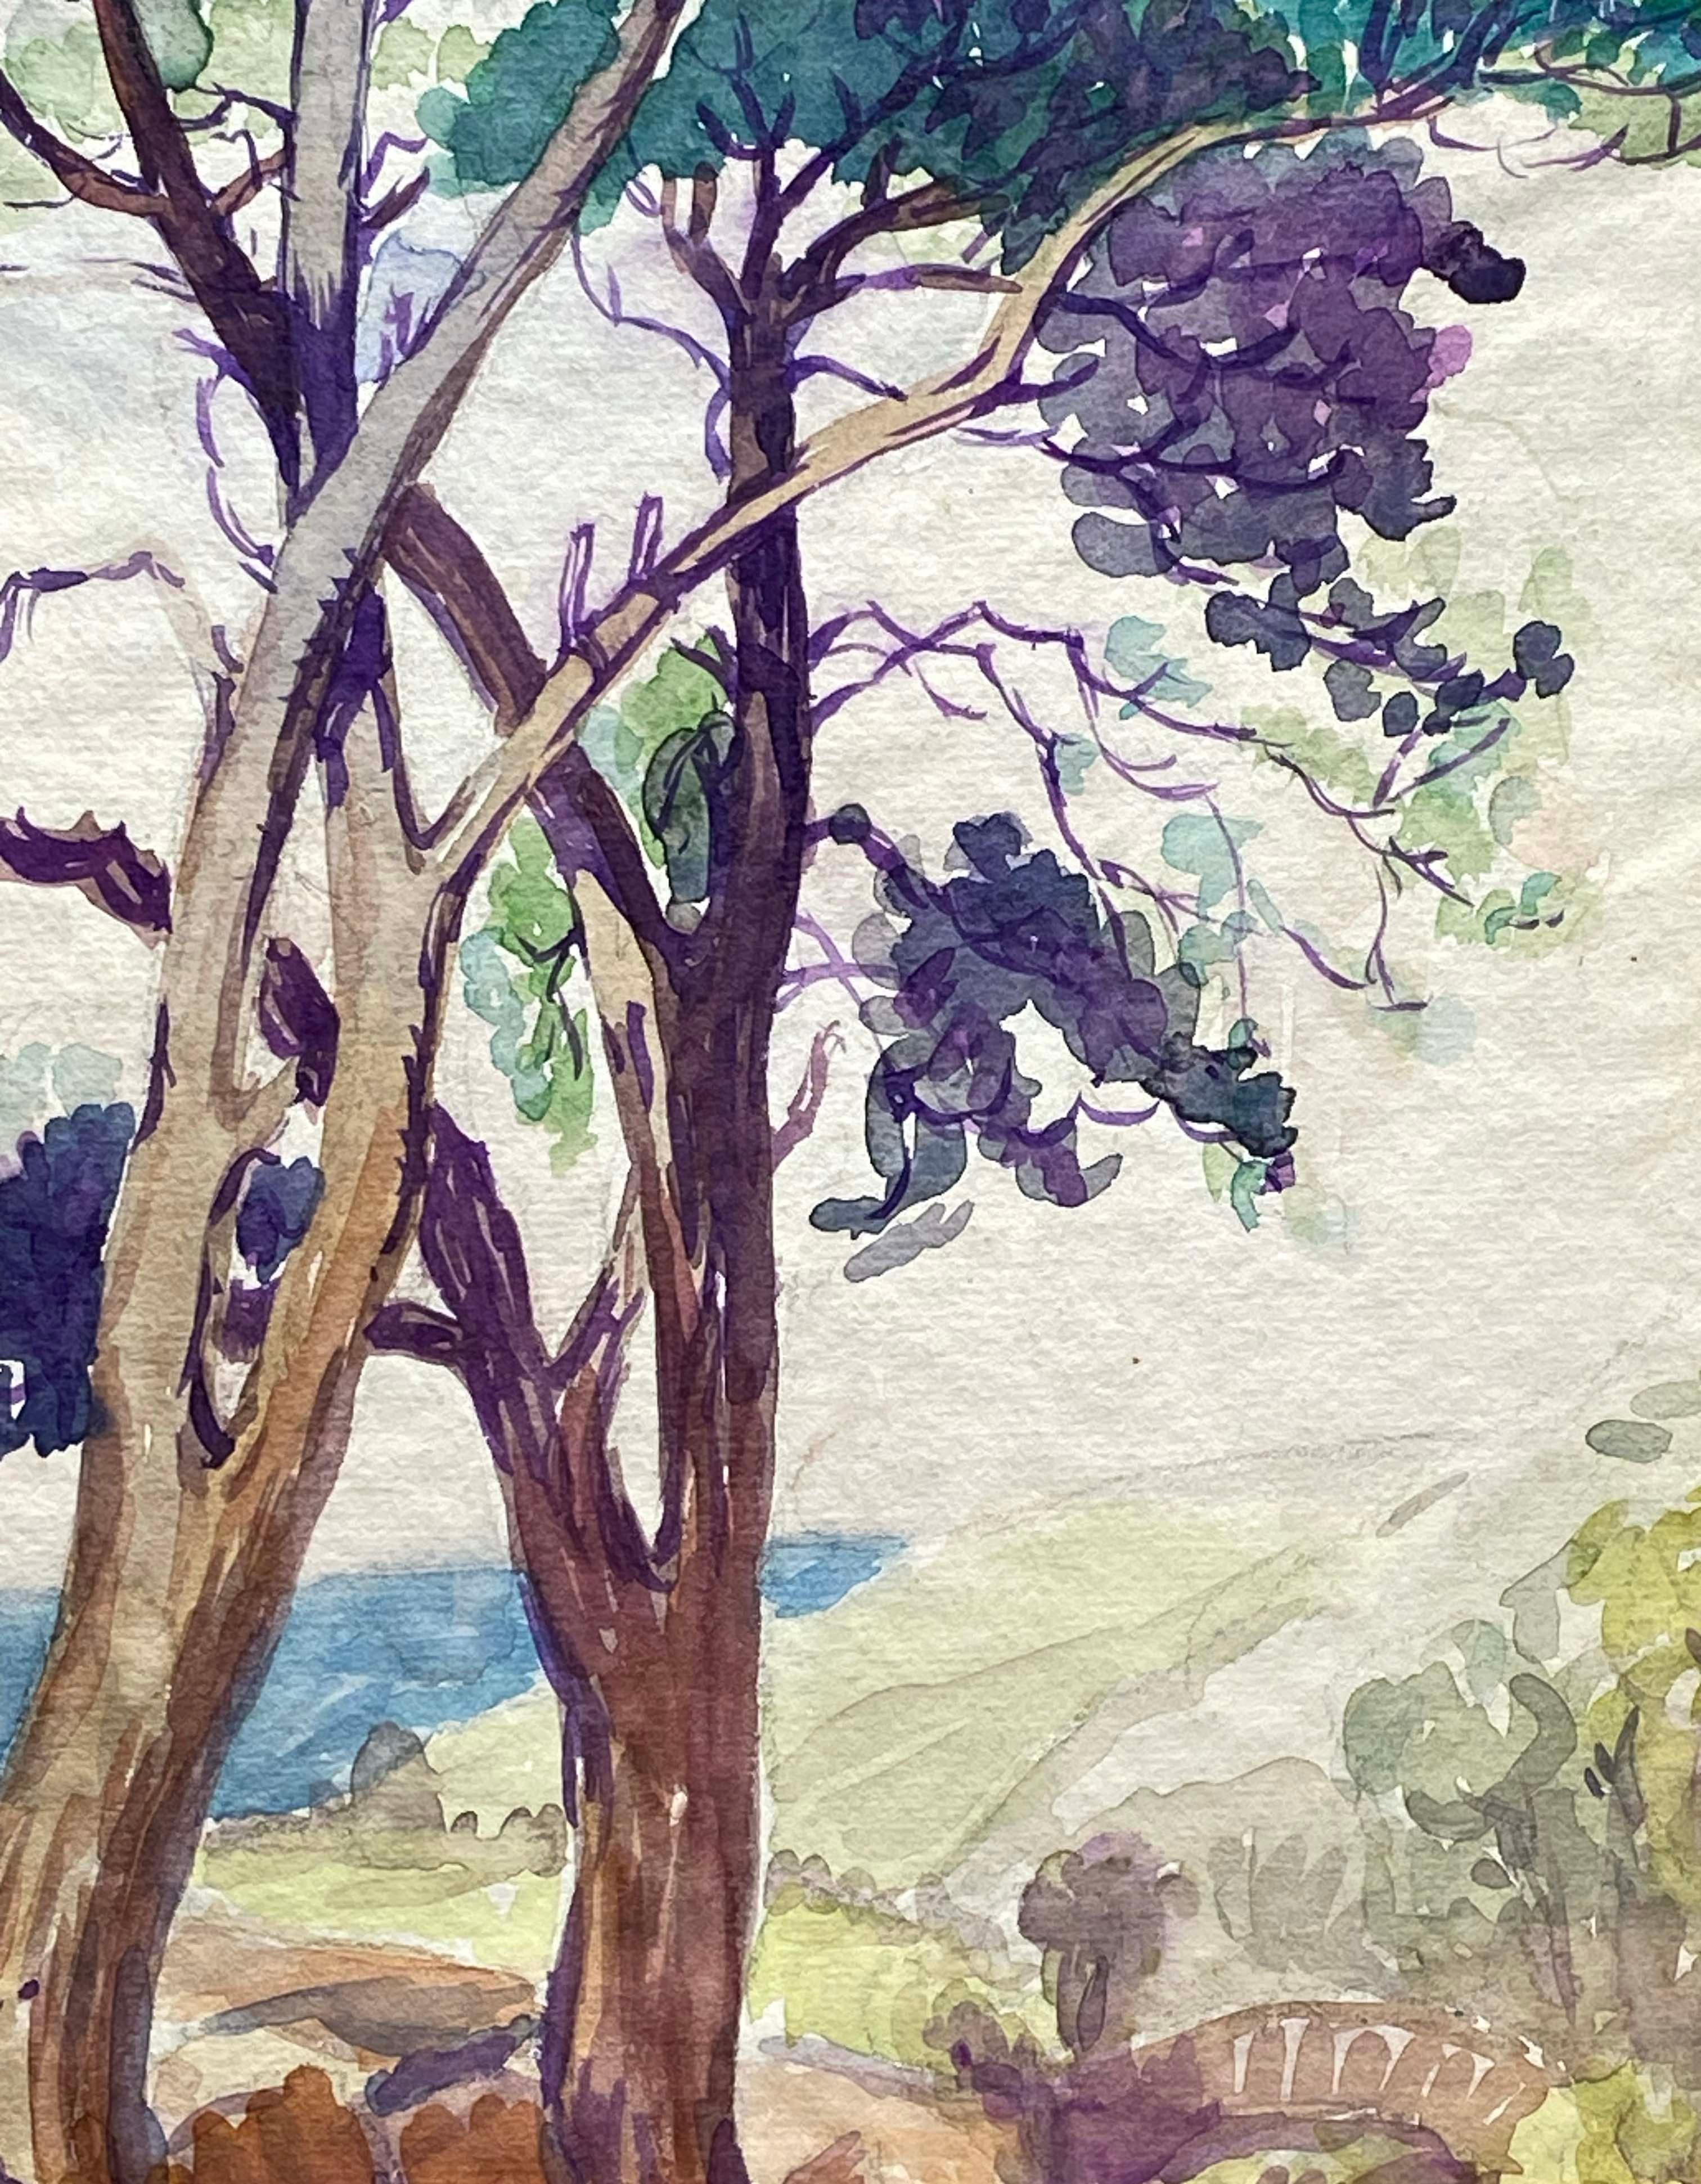 An original American impressionist figurative watercolor of a California coastline with trees.